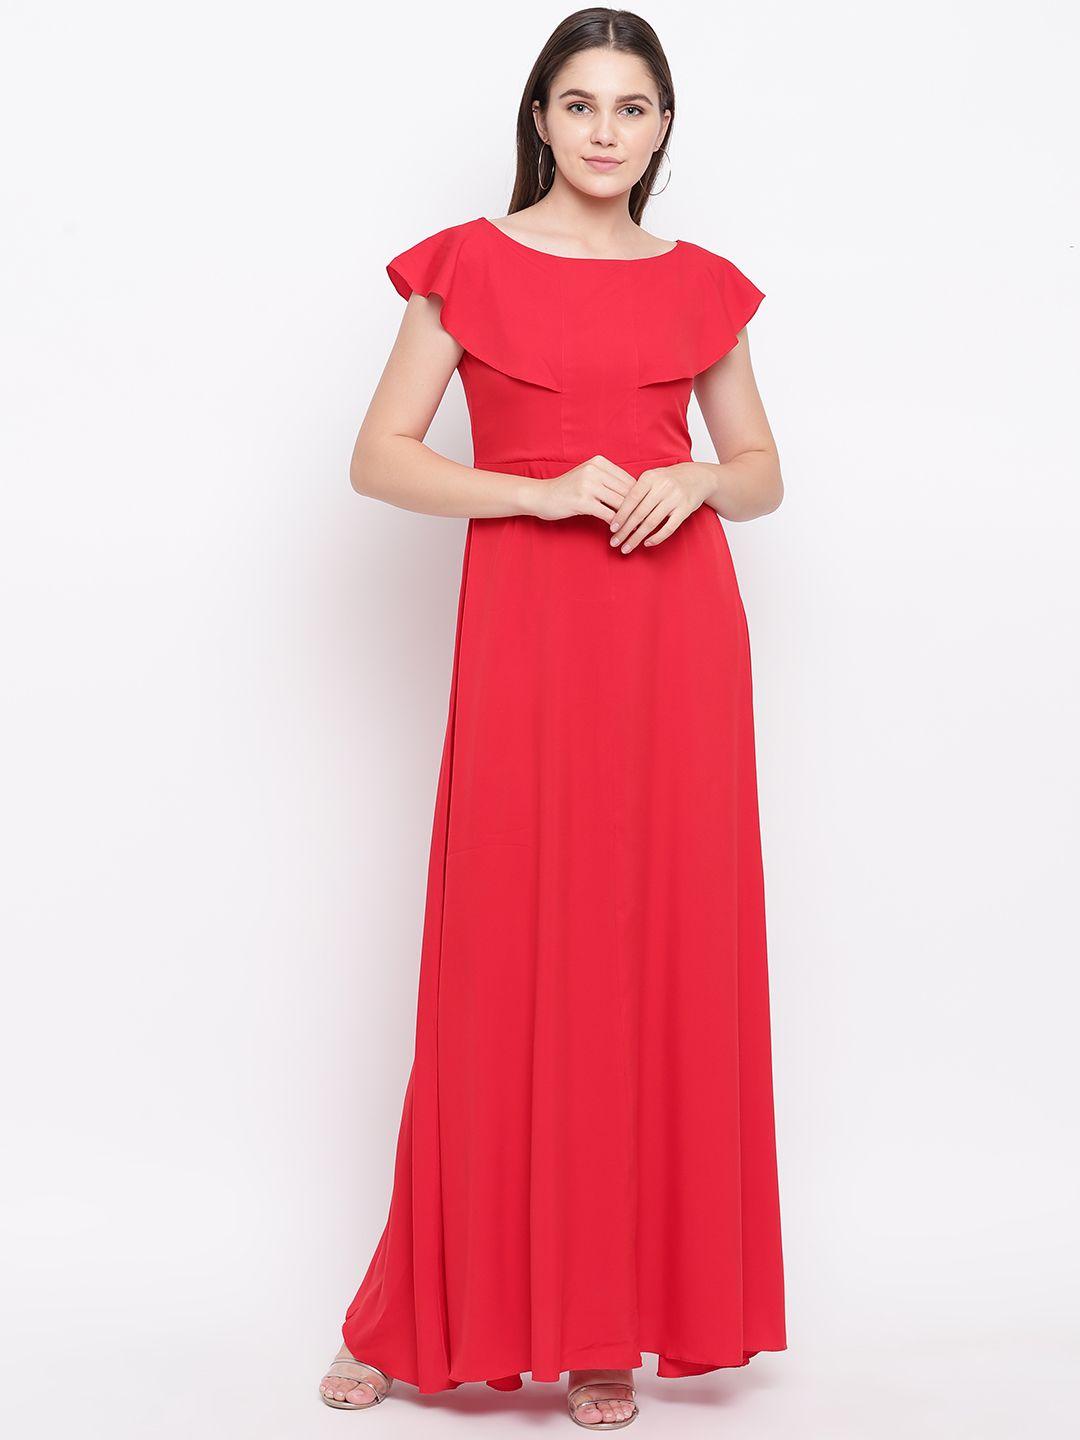 uptownie lite women red solid maxi dress